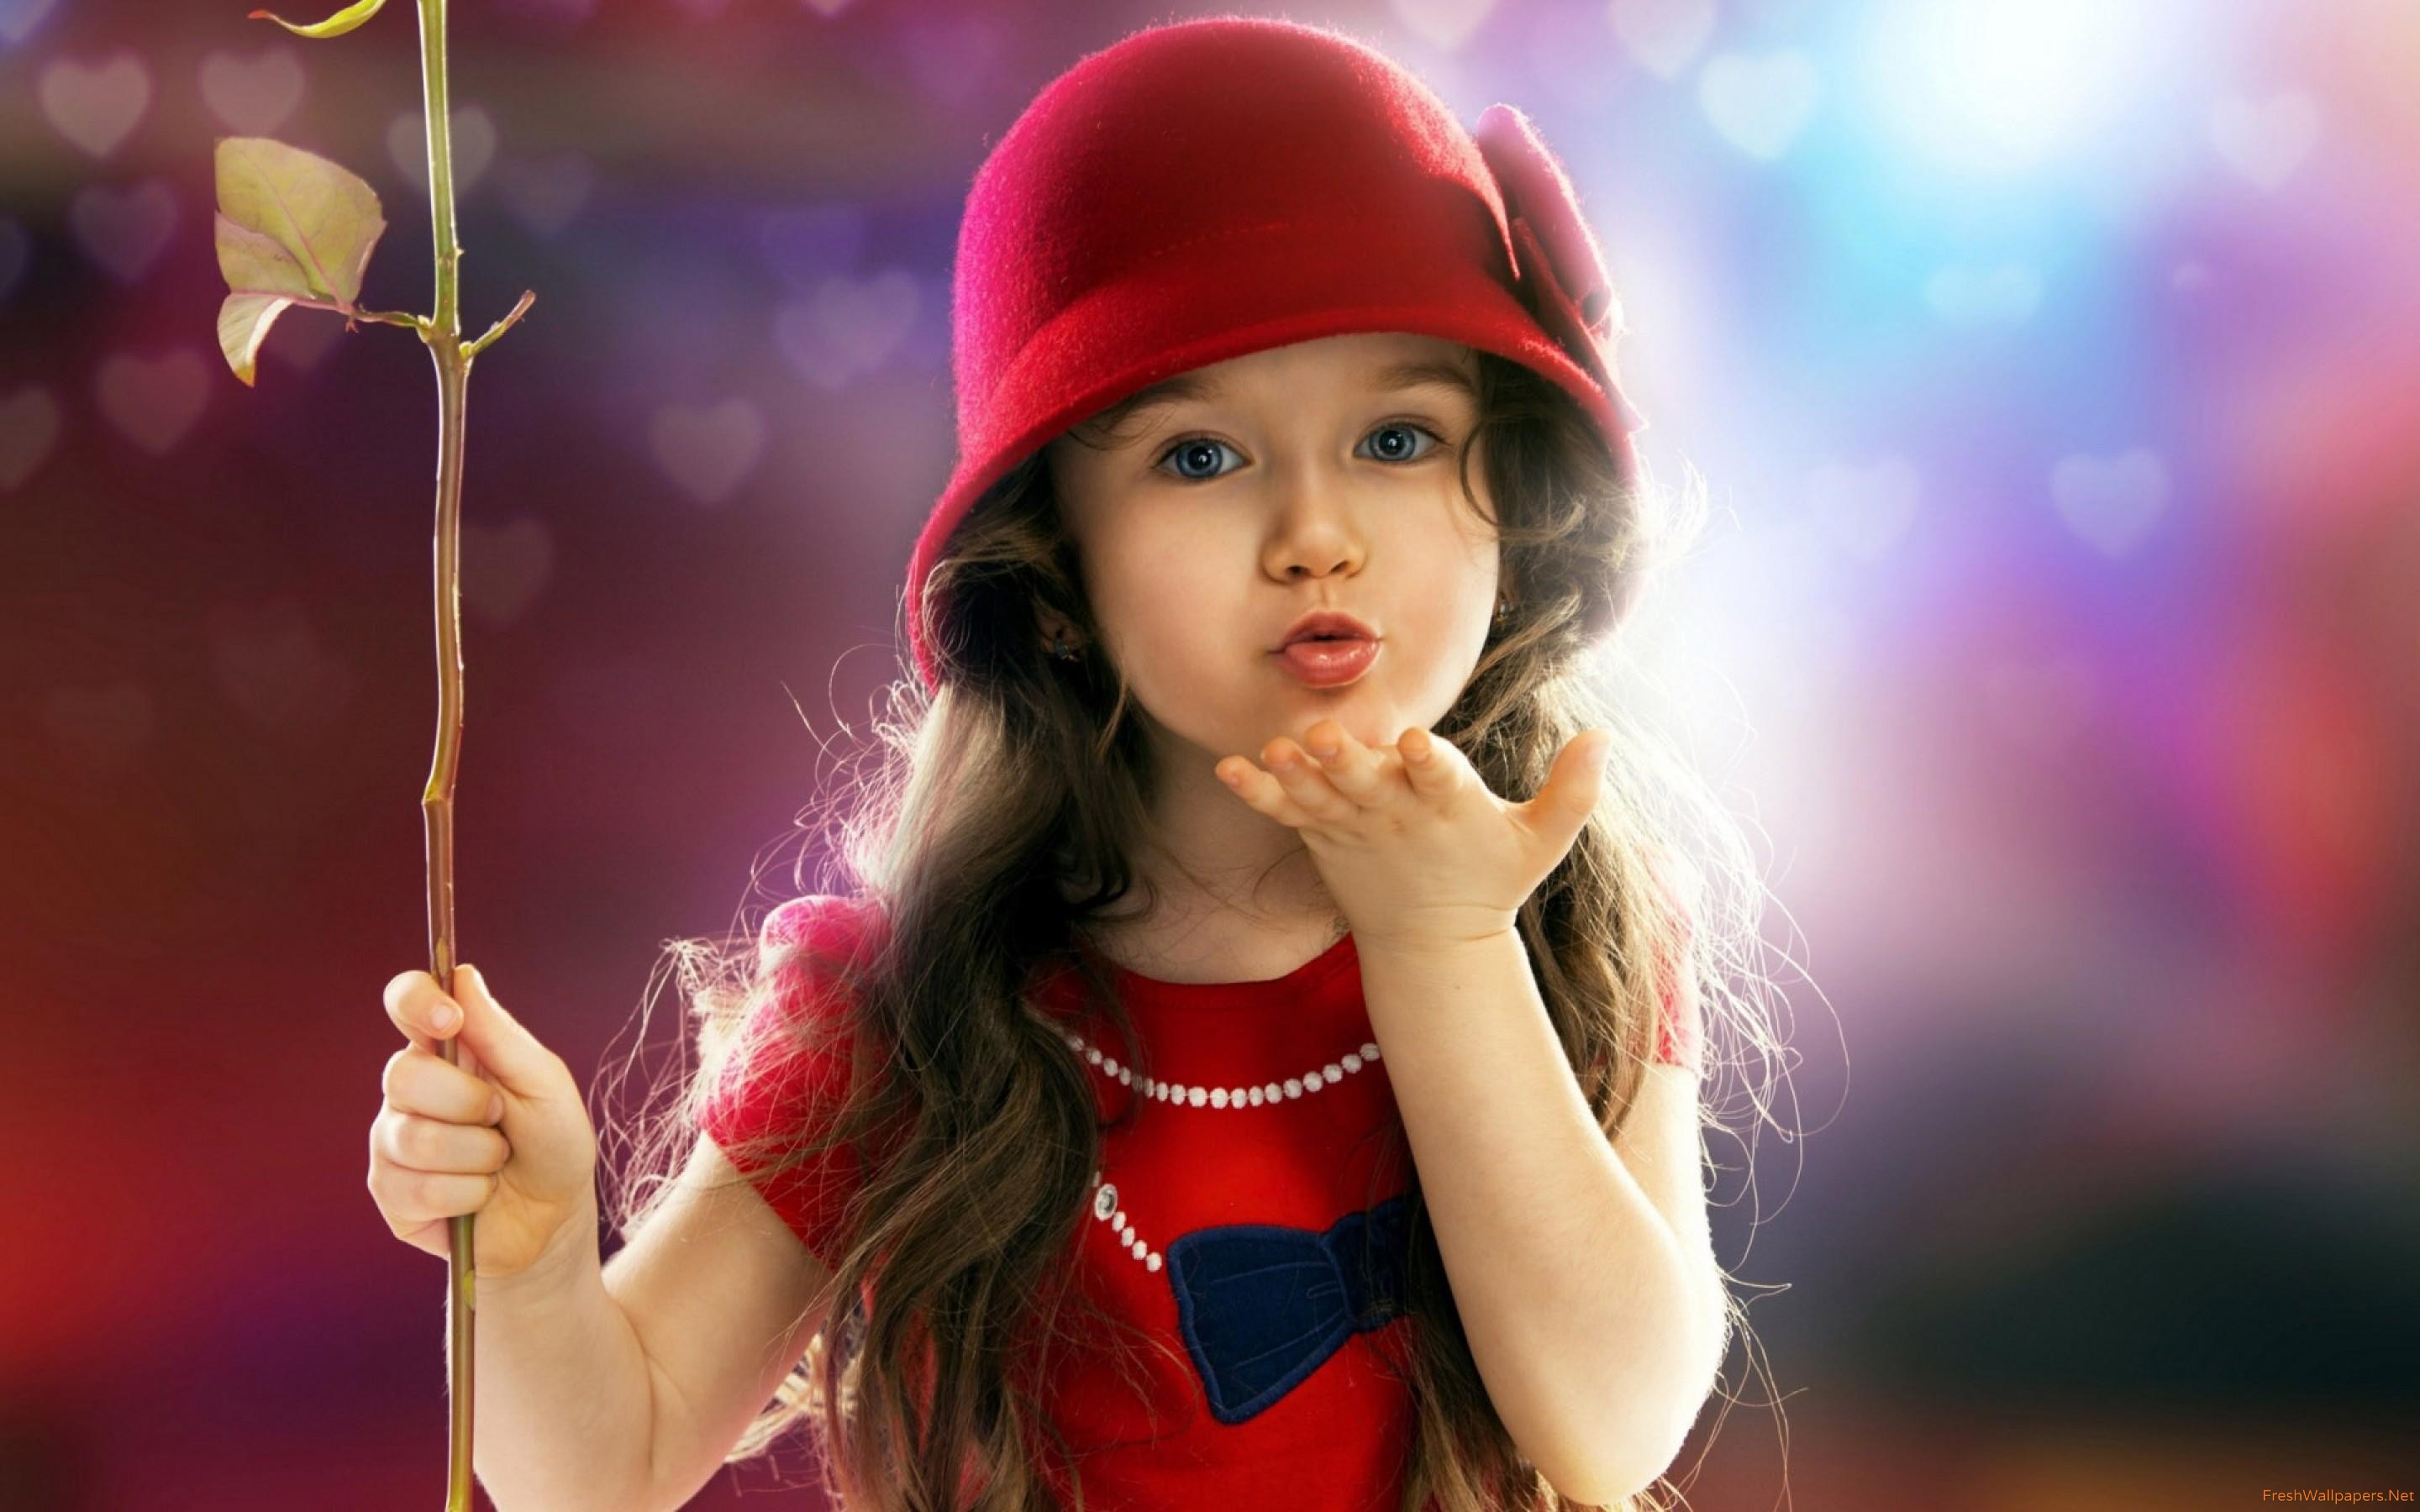 Cute little girl flying kiss wallpapers | Freshwallpapers